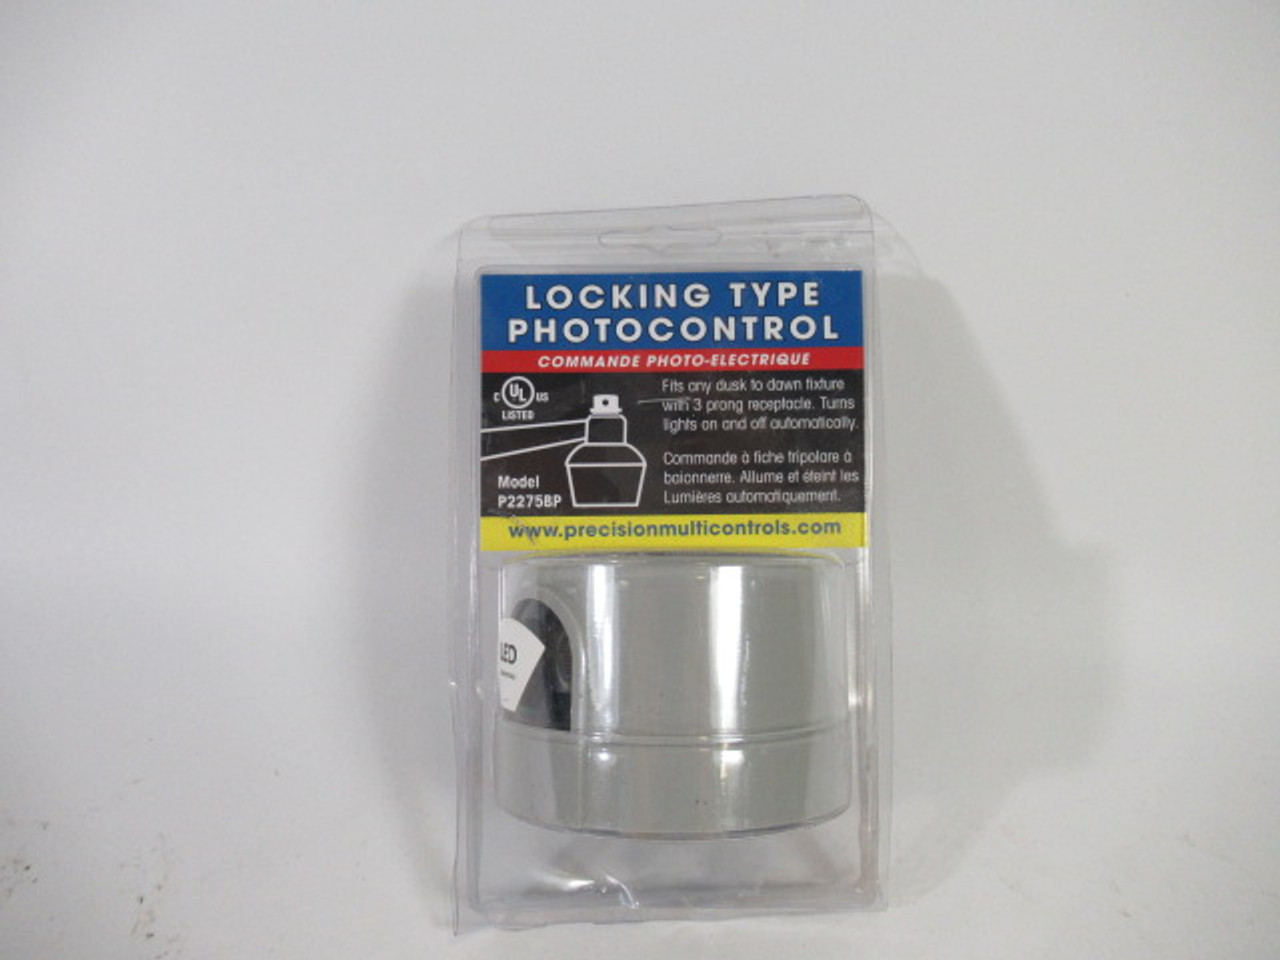 Precision Multiple Controls P2275BP Locking Photocontrol Motion Sensor ! NEW !